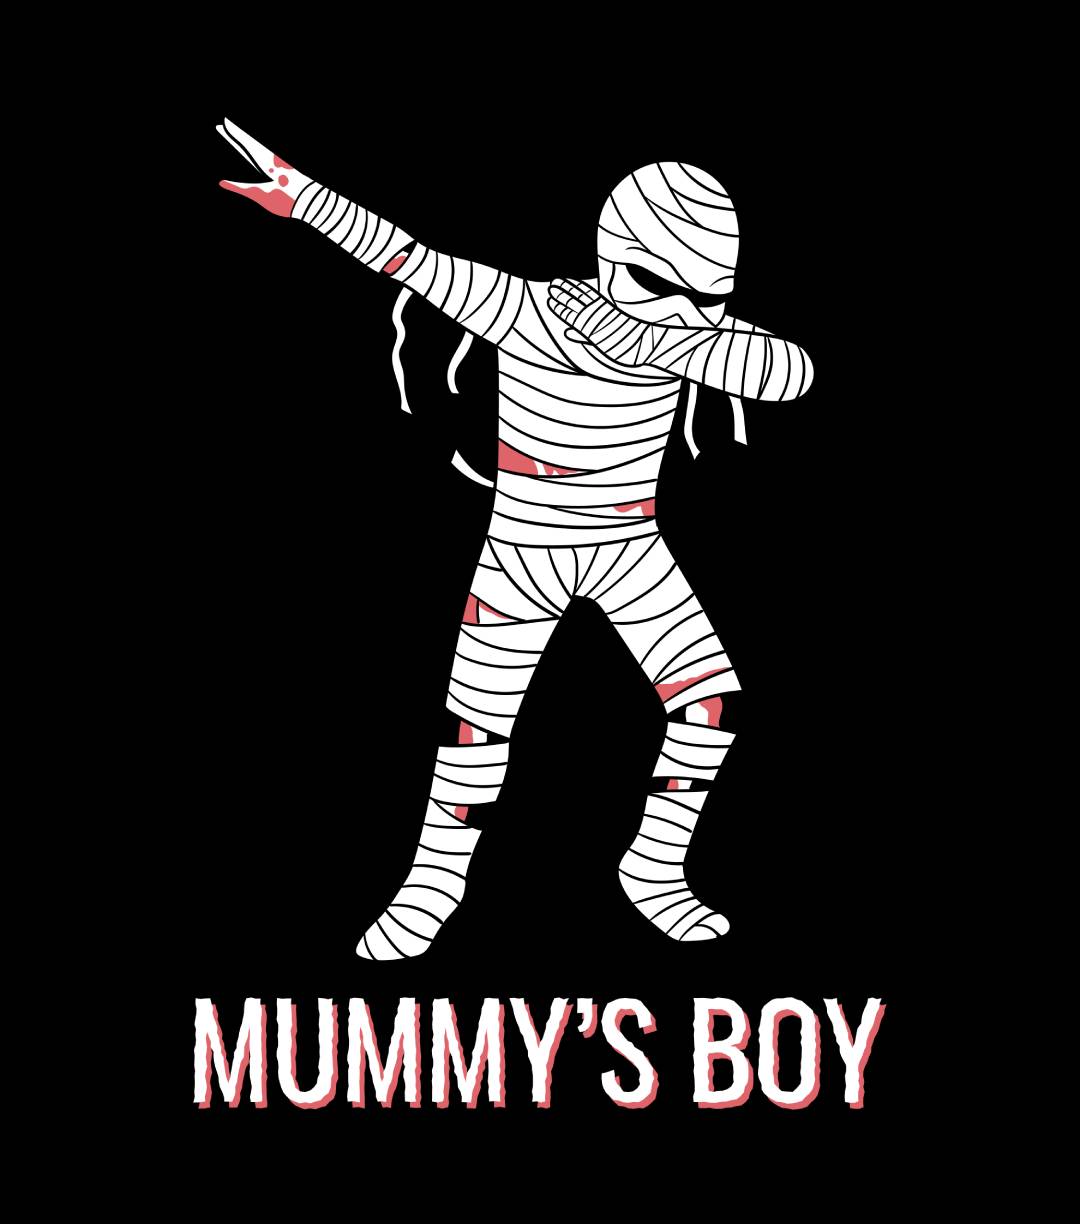 Mummy's Boy Shirt